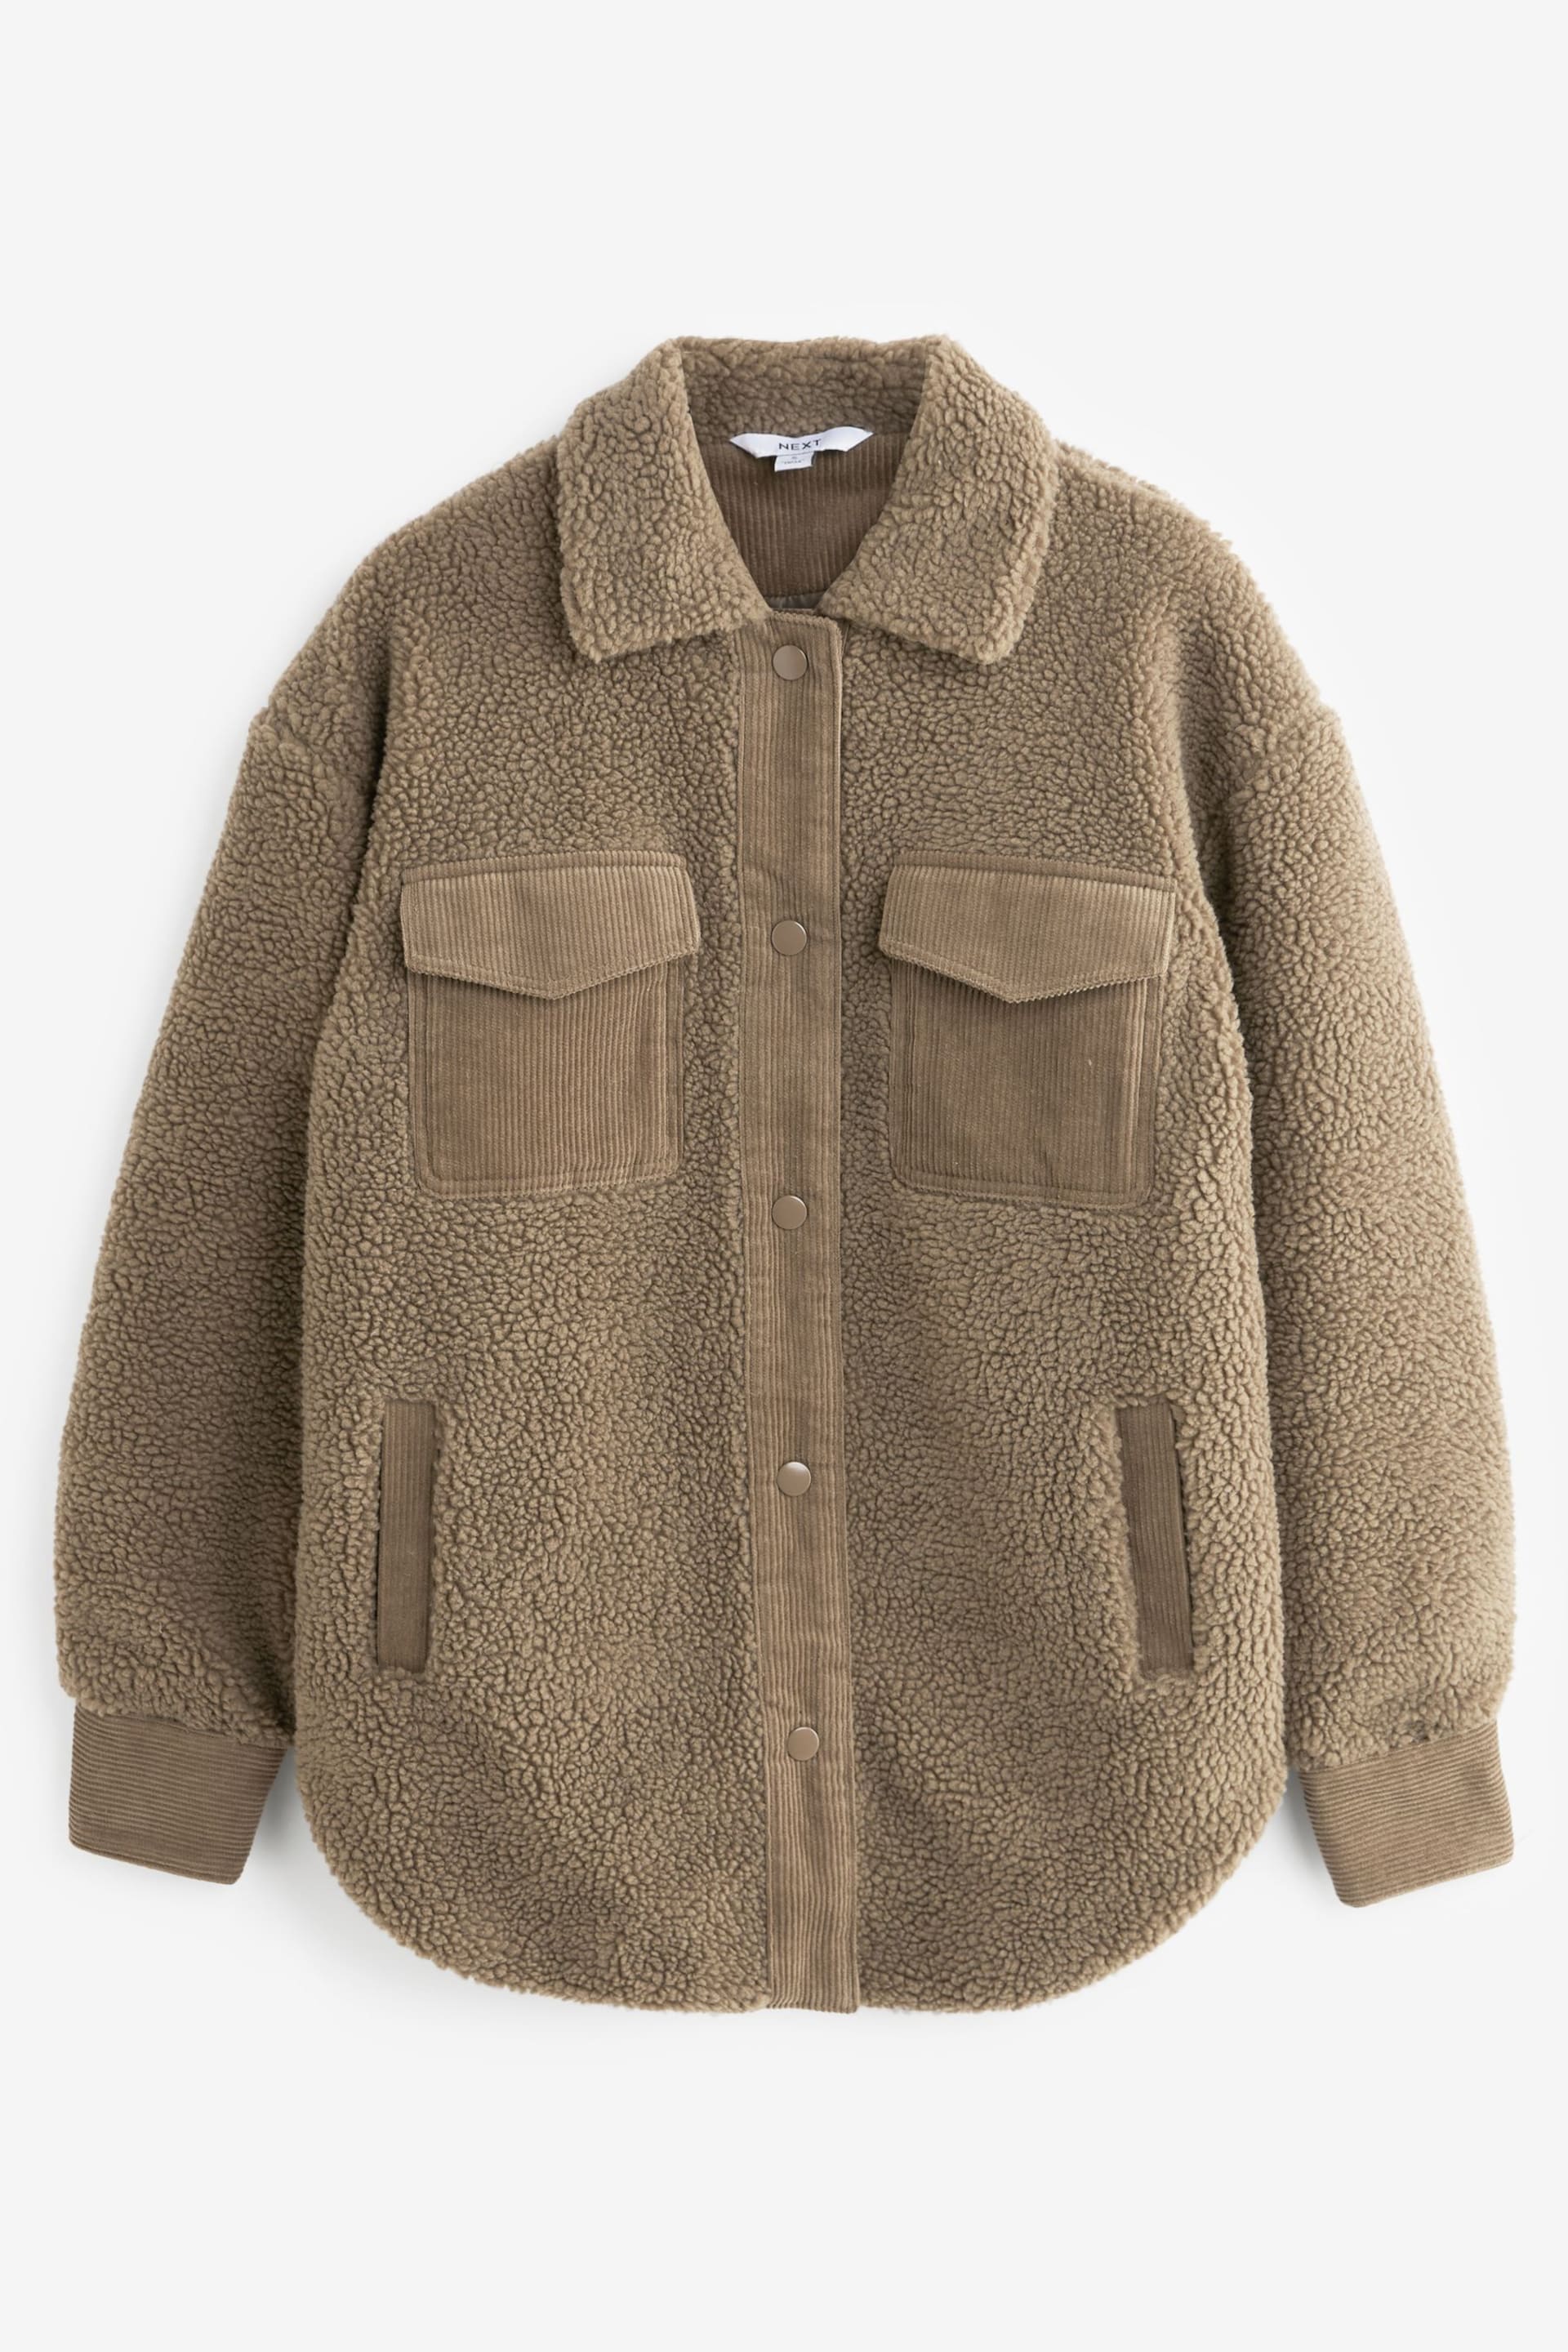 Taupe Brown Borg Fleece Corduroy Pocket Detail Teddy Jacket - Image 4 of 5